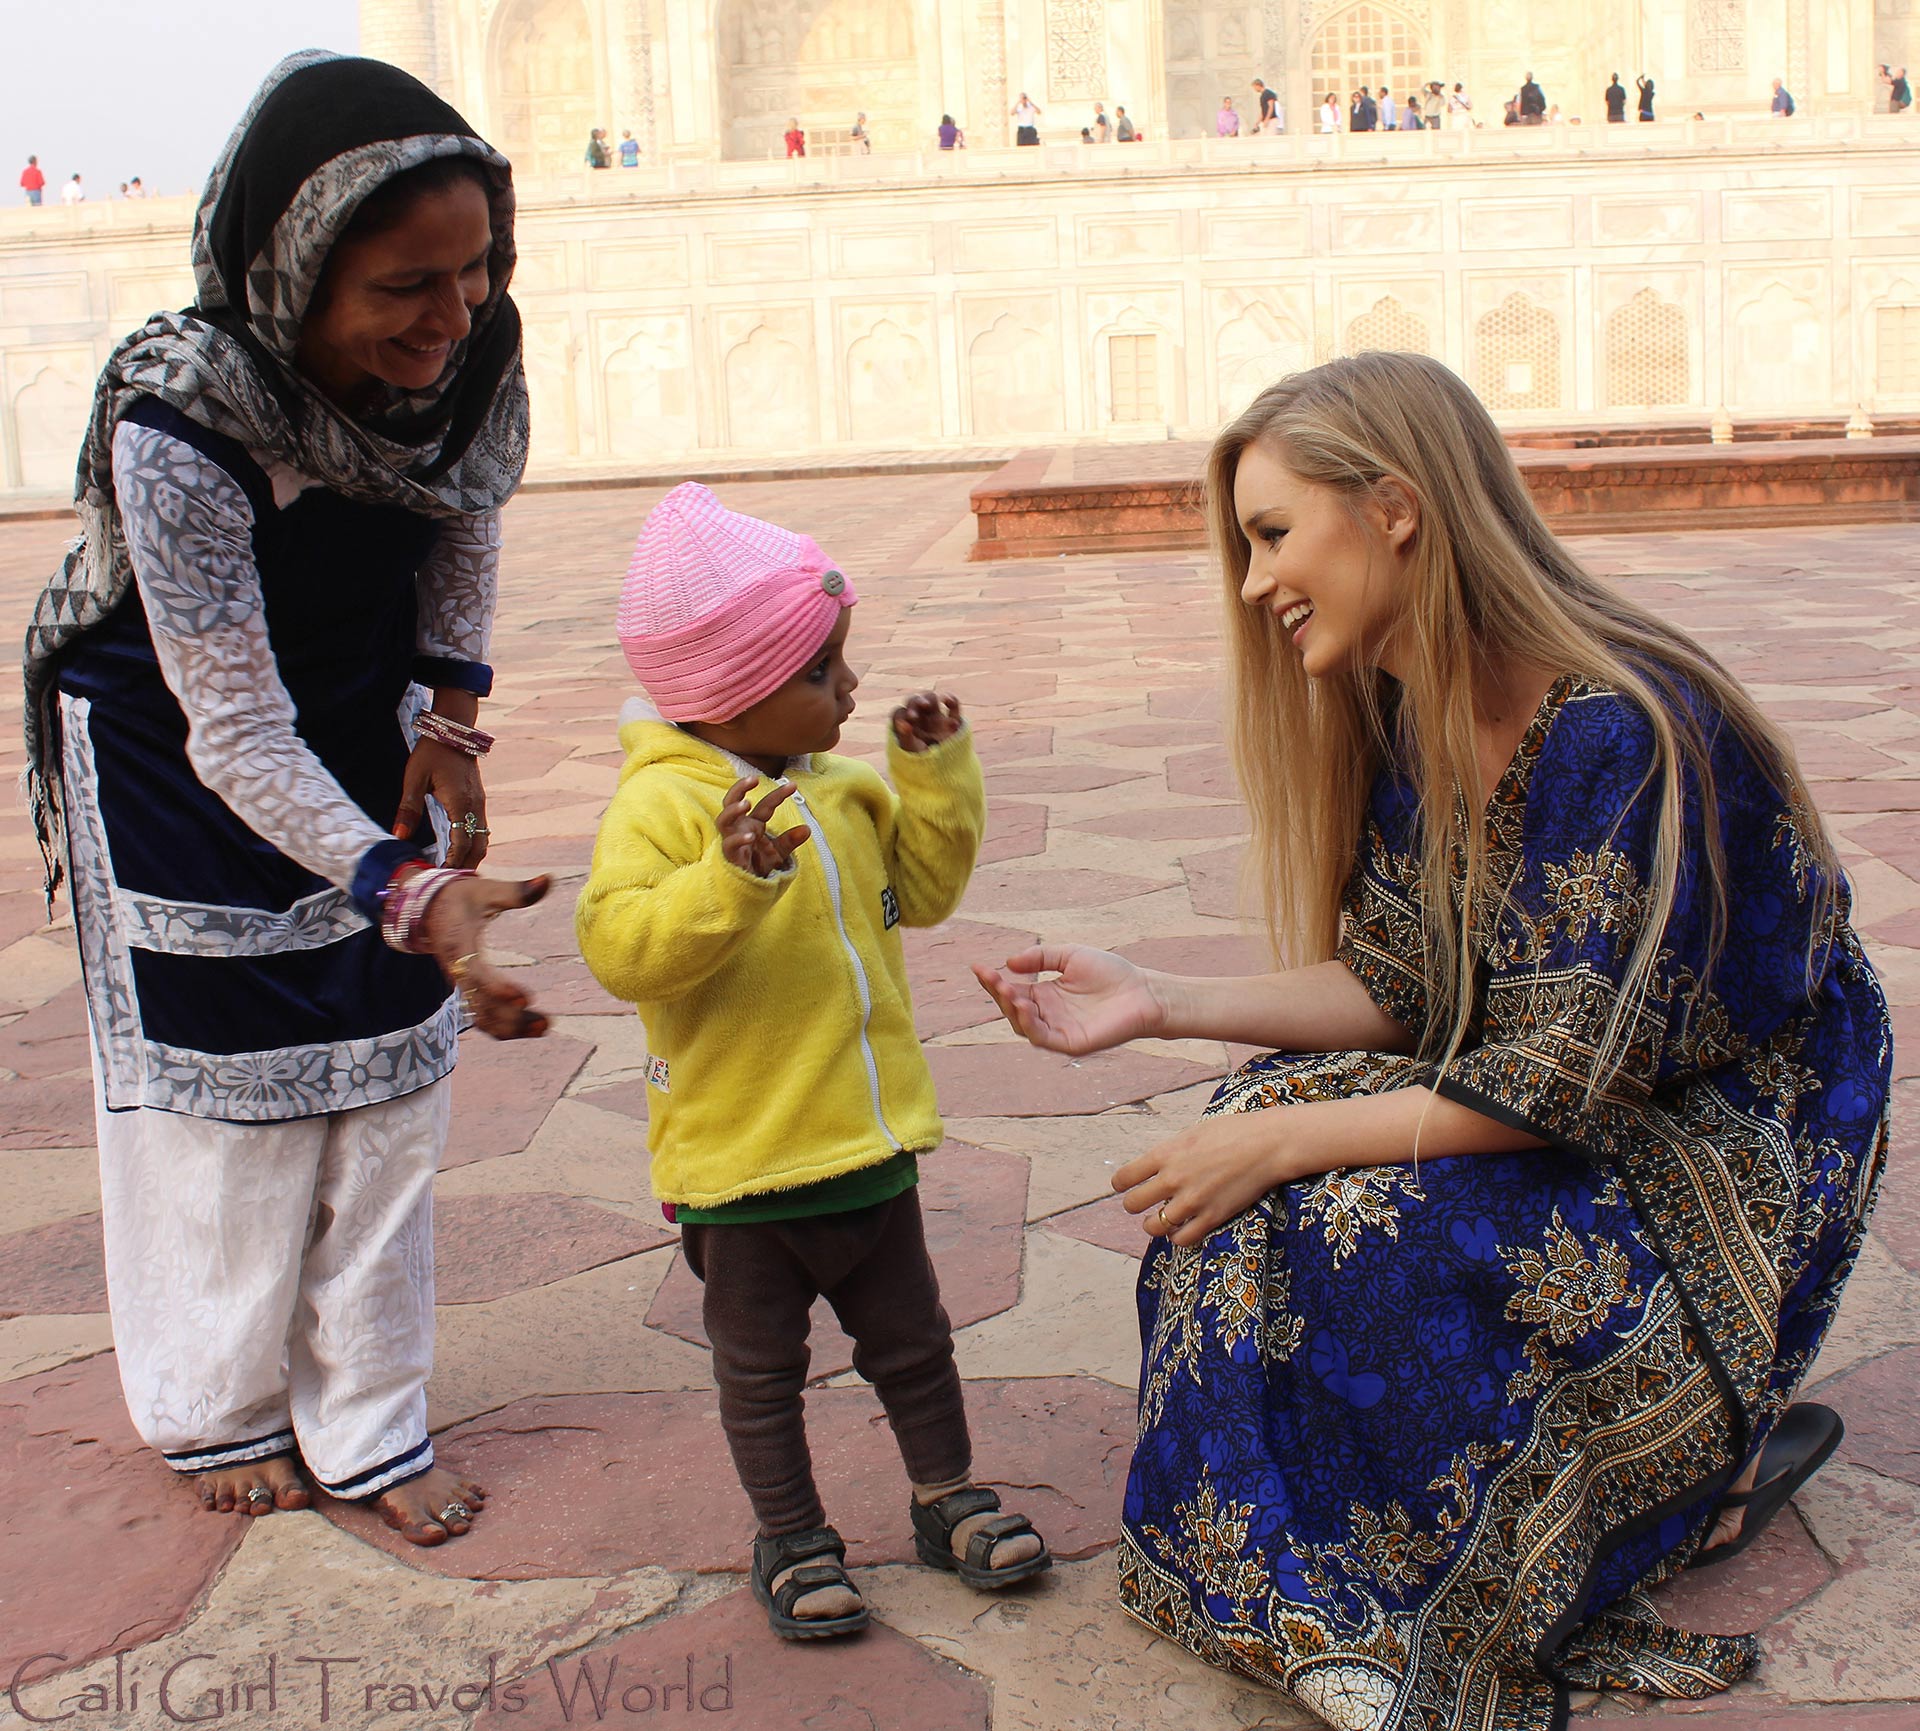 Welcoming locals coming to say hi at the Taj Mahal, India.